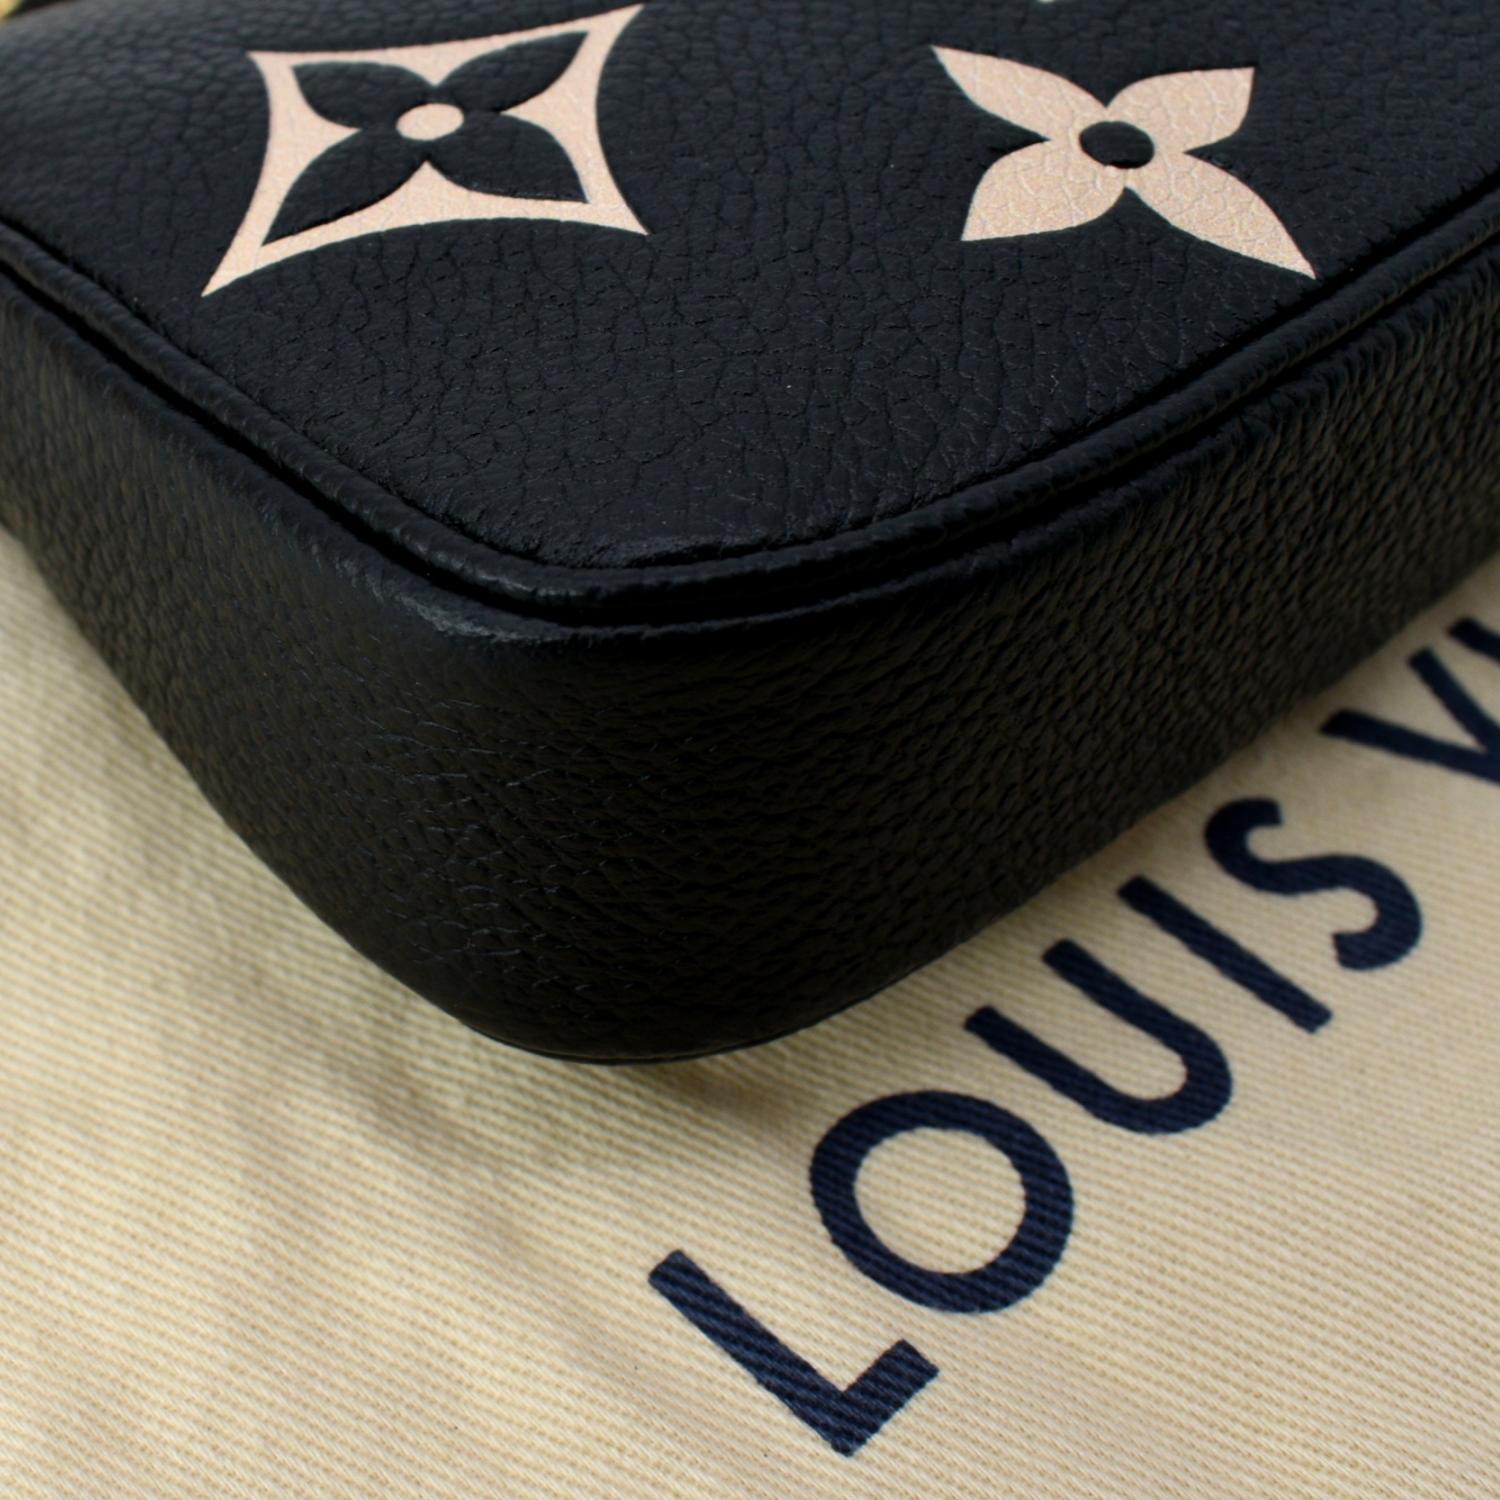 🔥NEW LOUIS VUITTON Mini Pochette Chain Monogram Empreinte Leather  Black❤️GIFT!